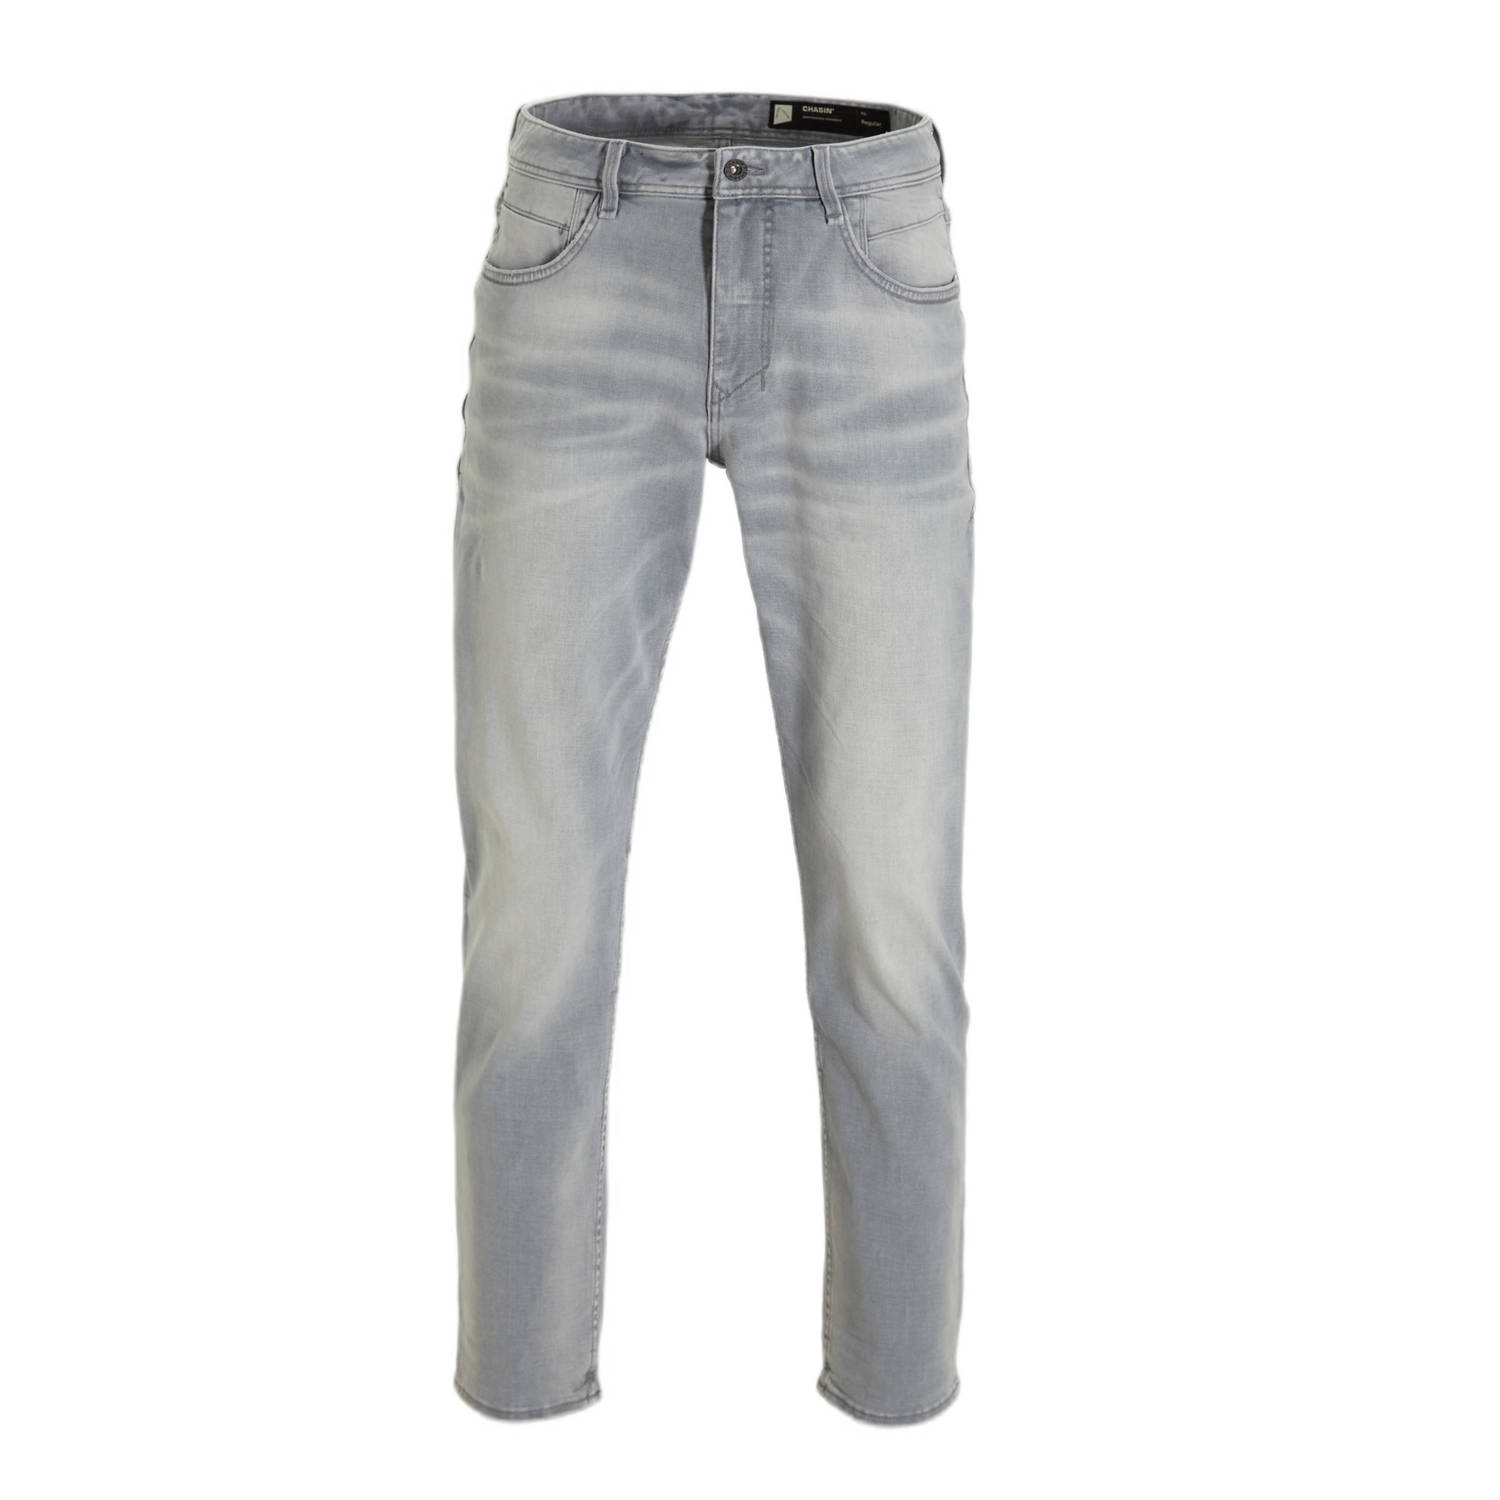 CHASIN' regular fit jeans Iron Brighton grey denim